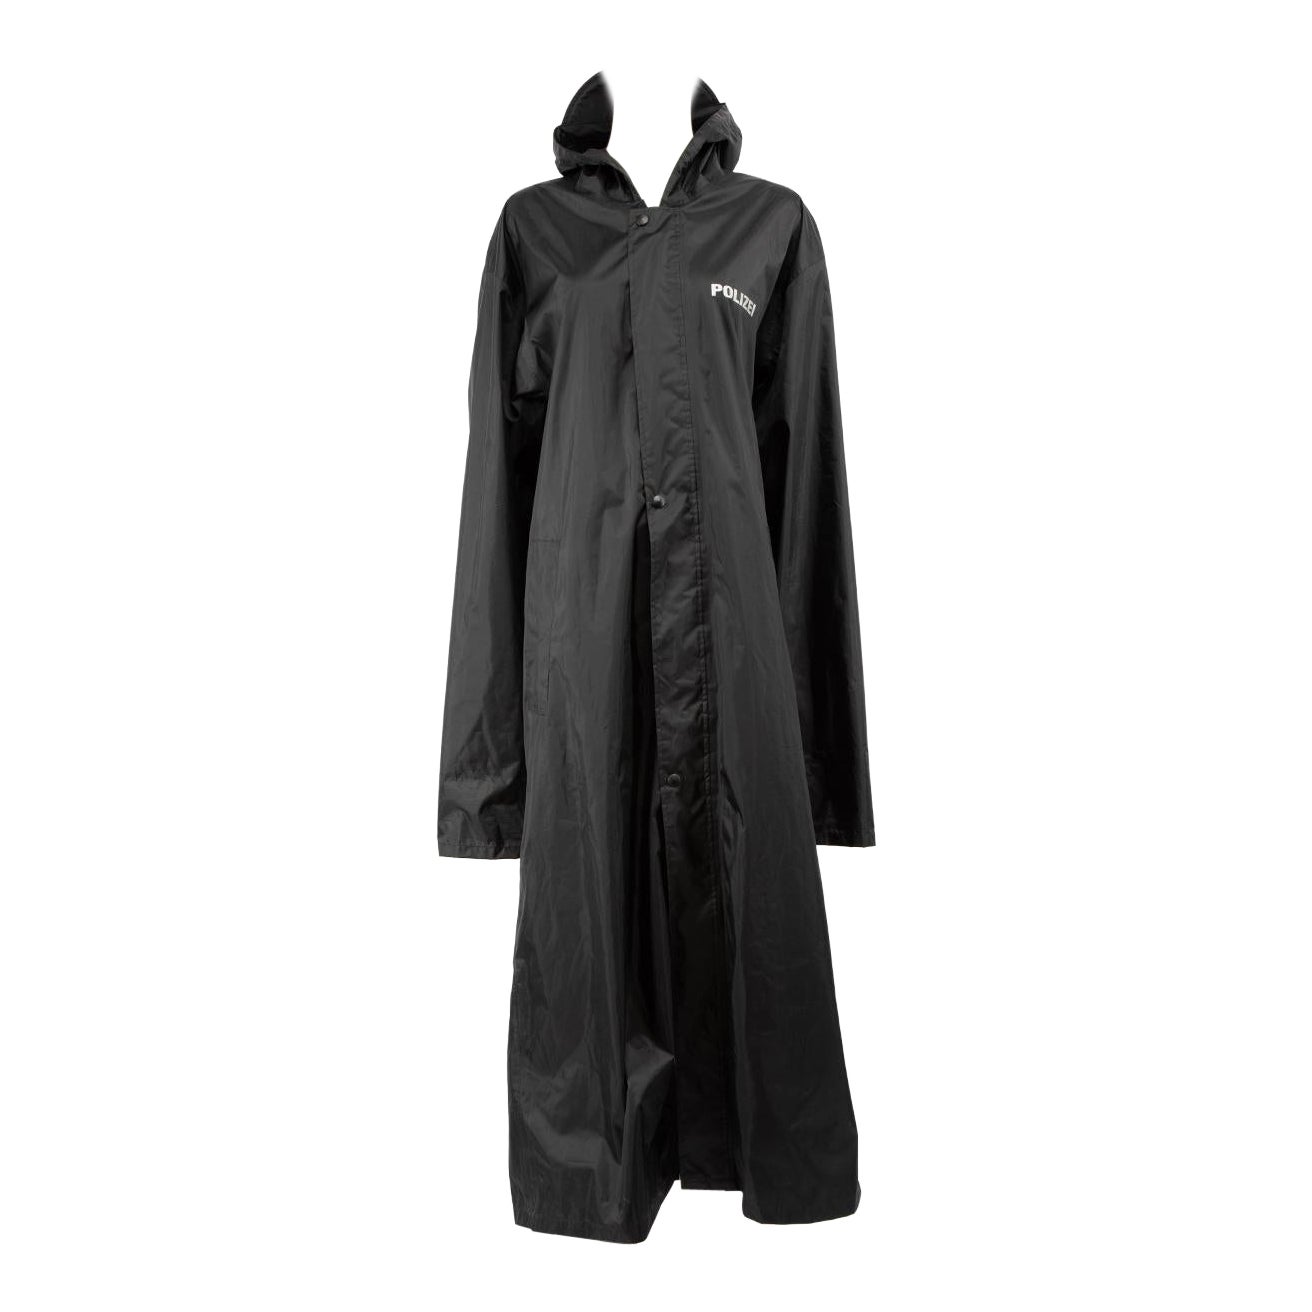 Vetements Black Polizei Oversized Hooded Raincoat Size L For Sale